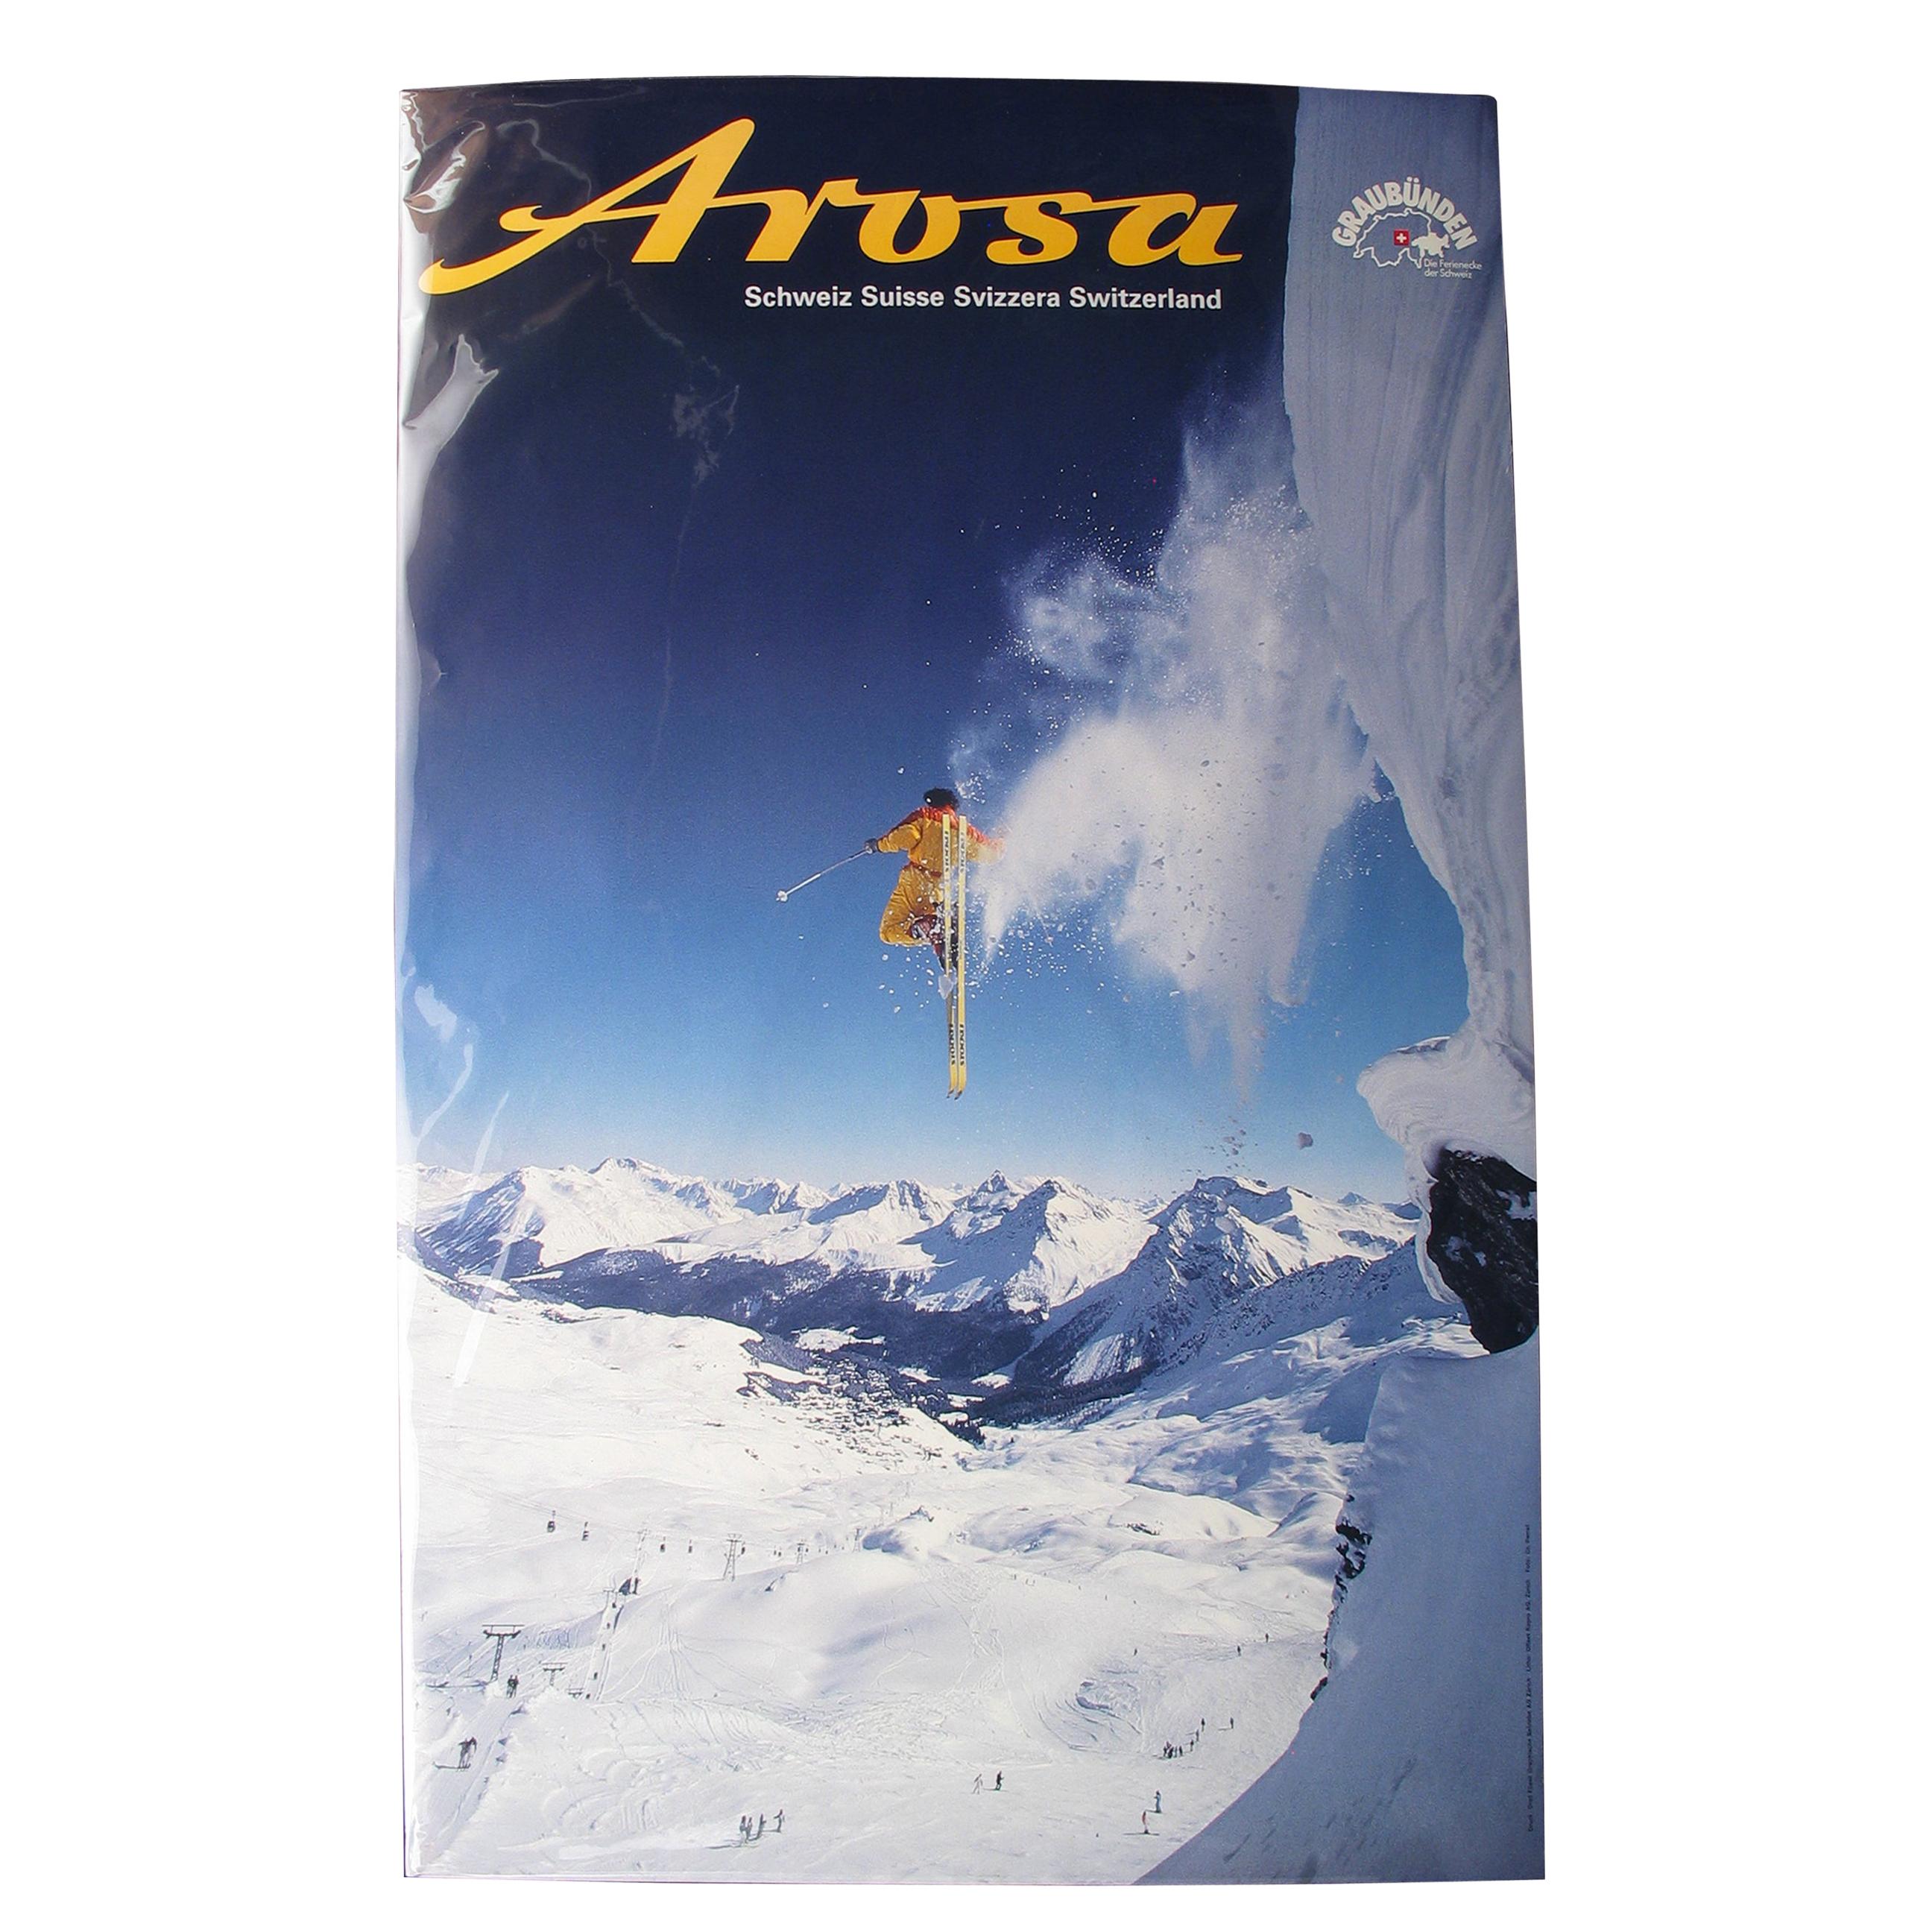 Vintage Travel Ski Poster, Arosa, Switzerland